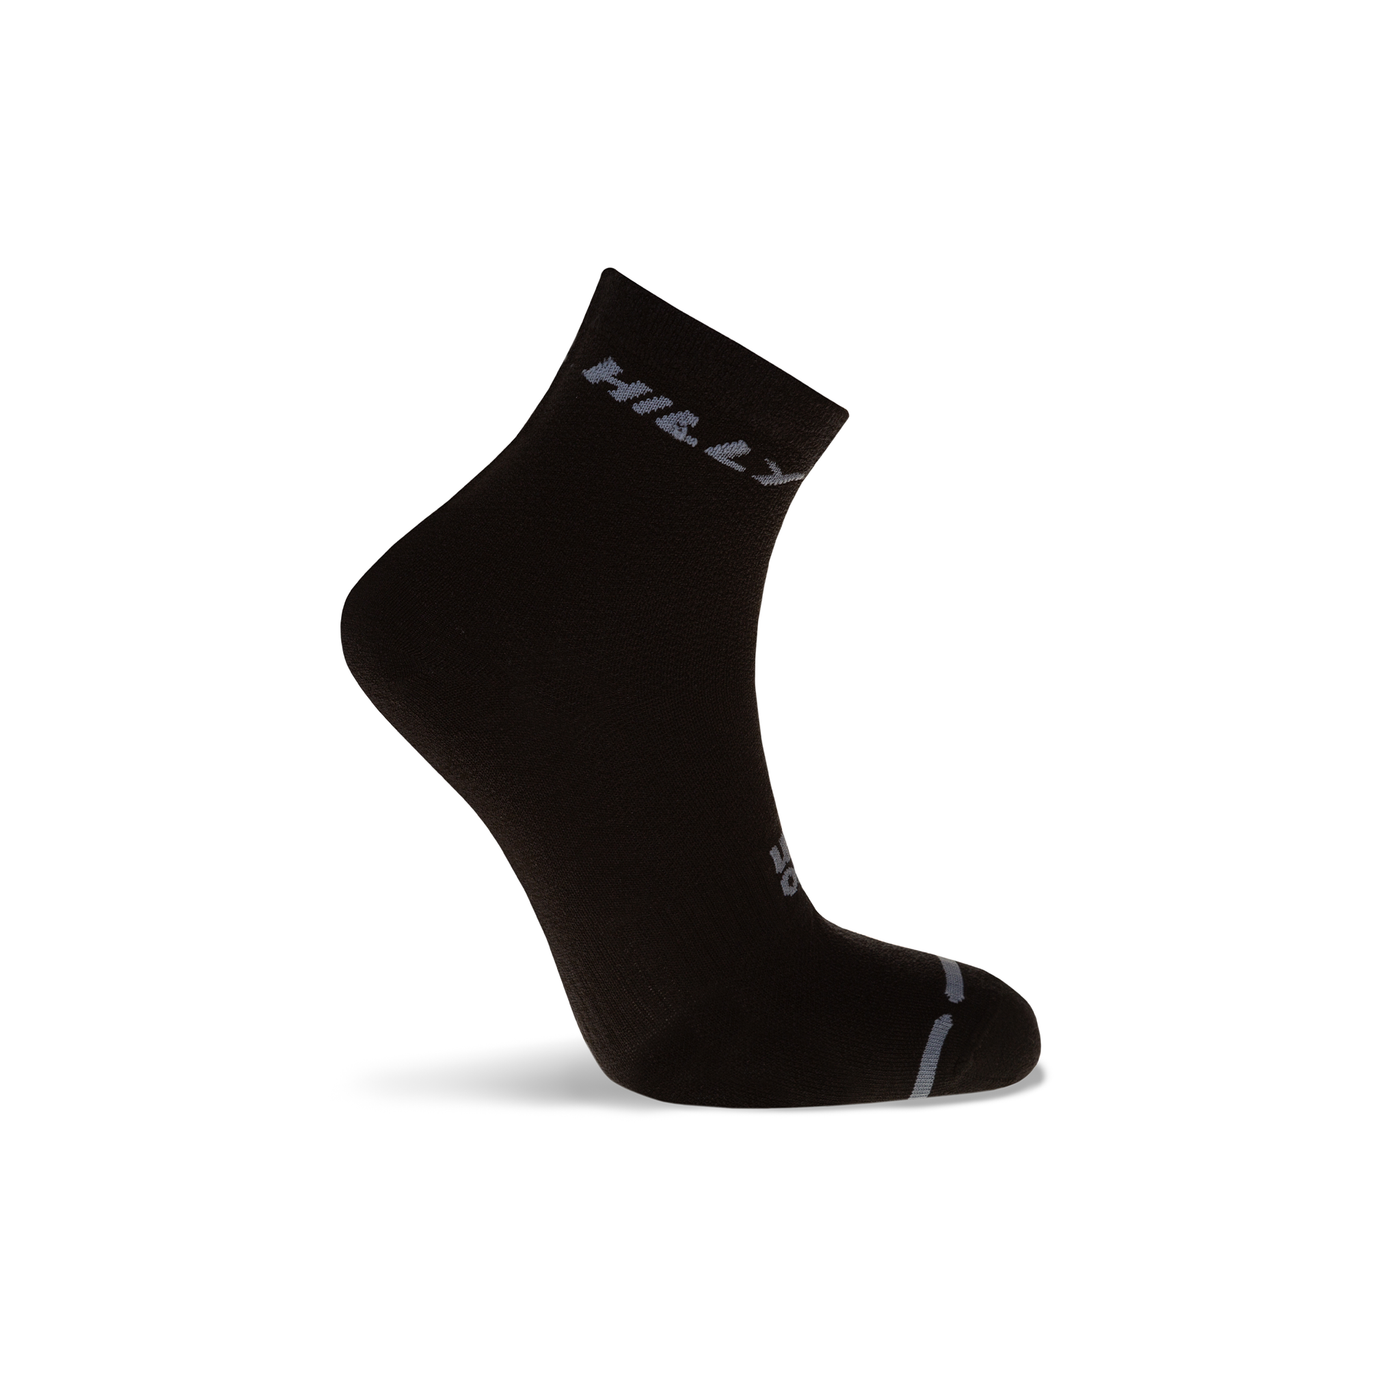 Hilly Active Anklet Zero (Lite Anklet) - Black/ Grey